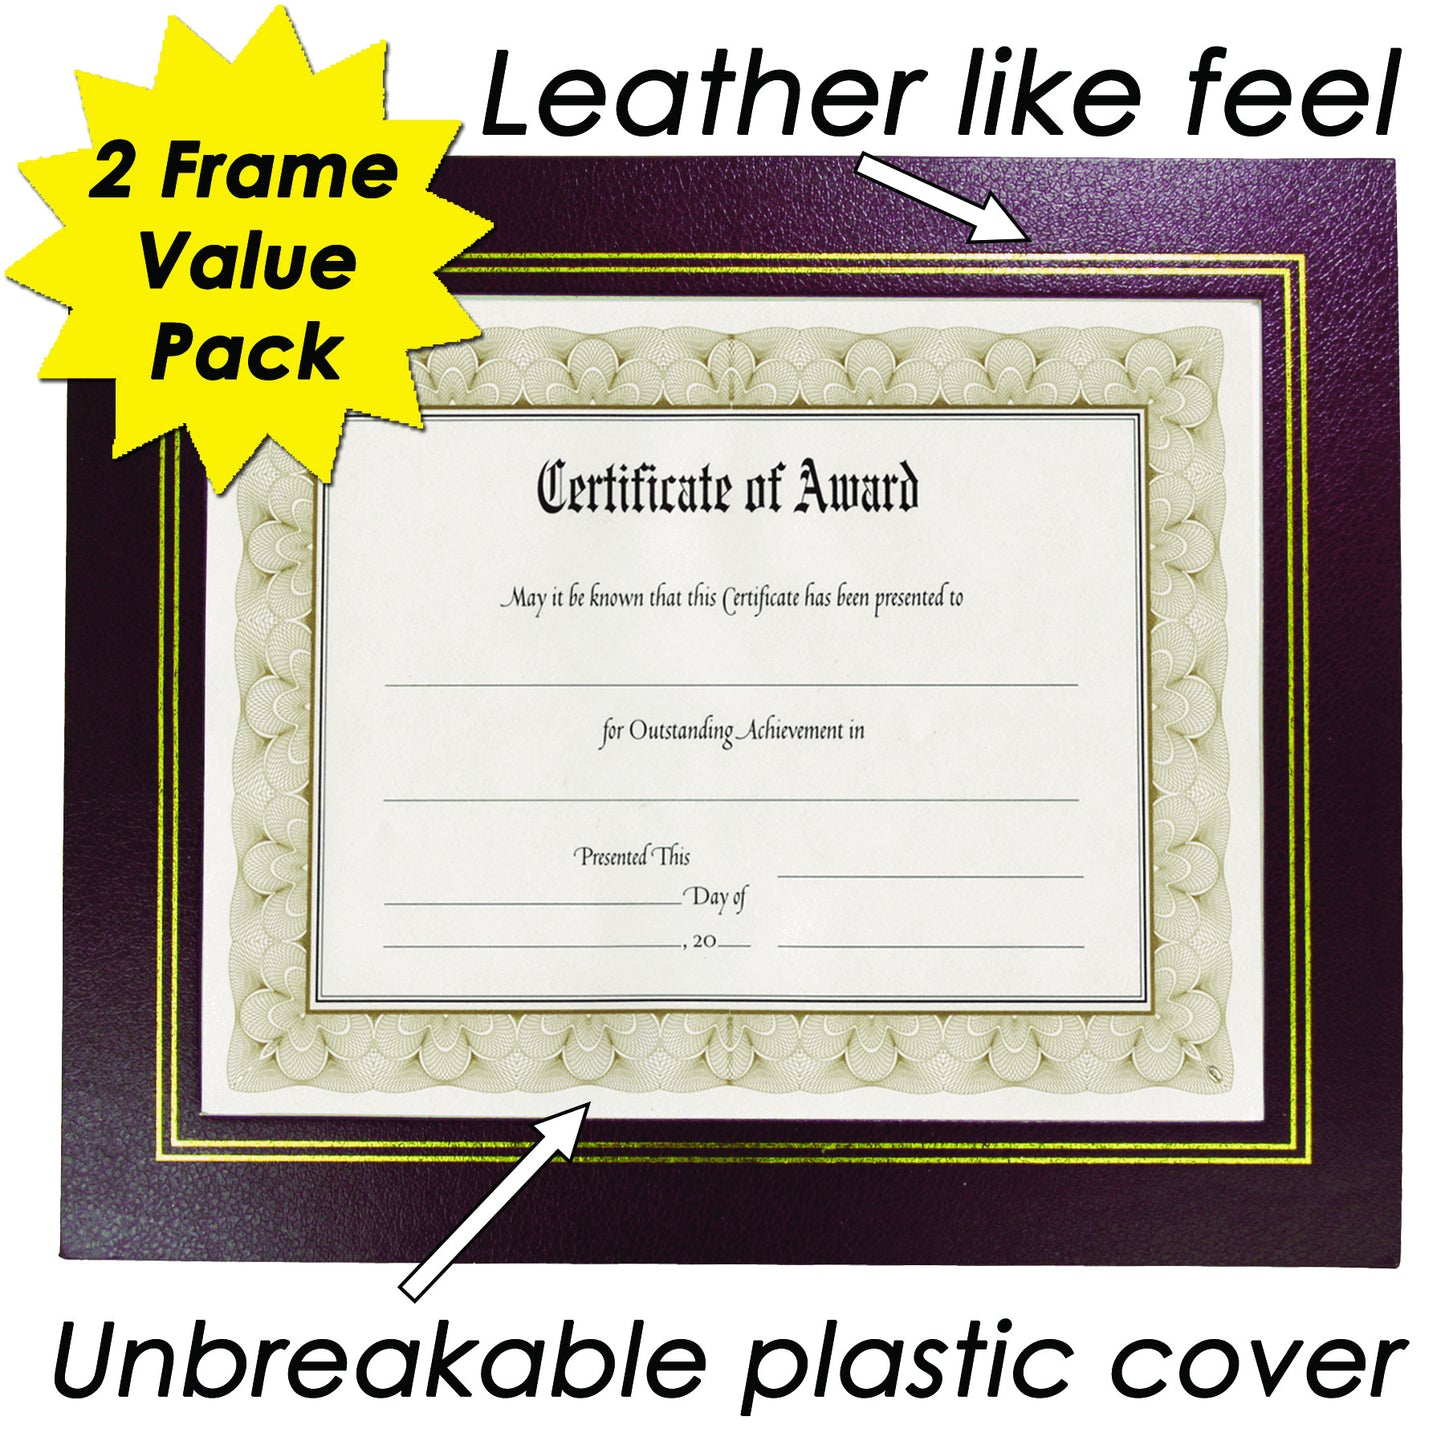 Leather Grain Certificate Frame 8.5" x 11", Burgundy, 2 Pack